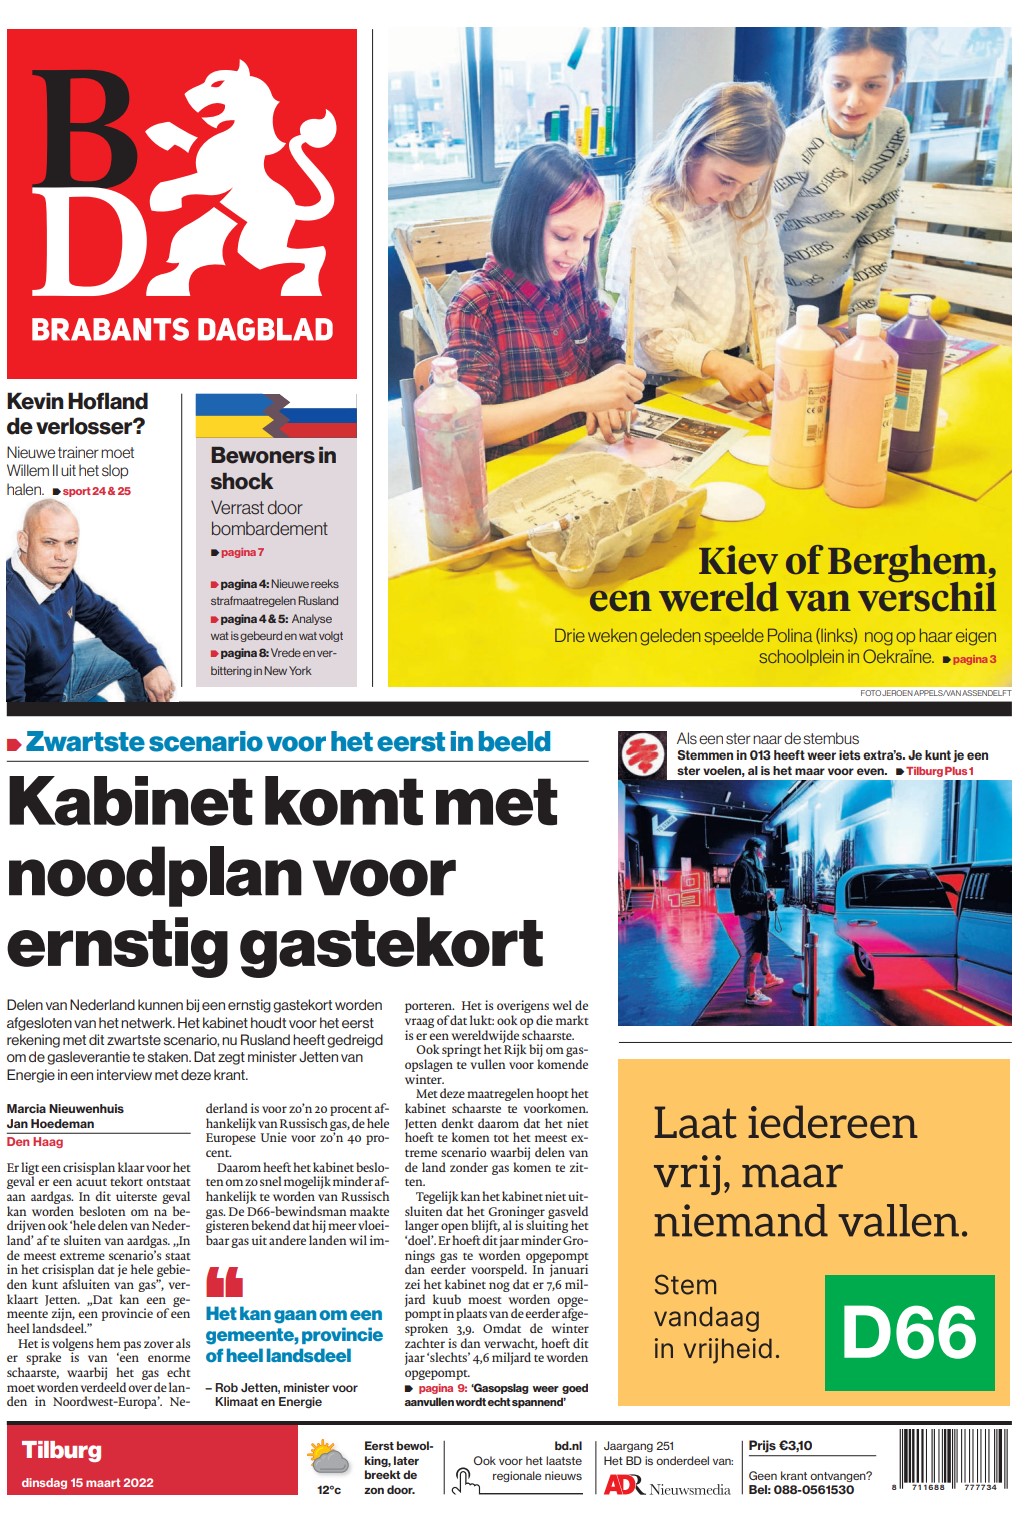 Brabants Dagblad-regio Tilburg-15-03-2022